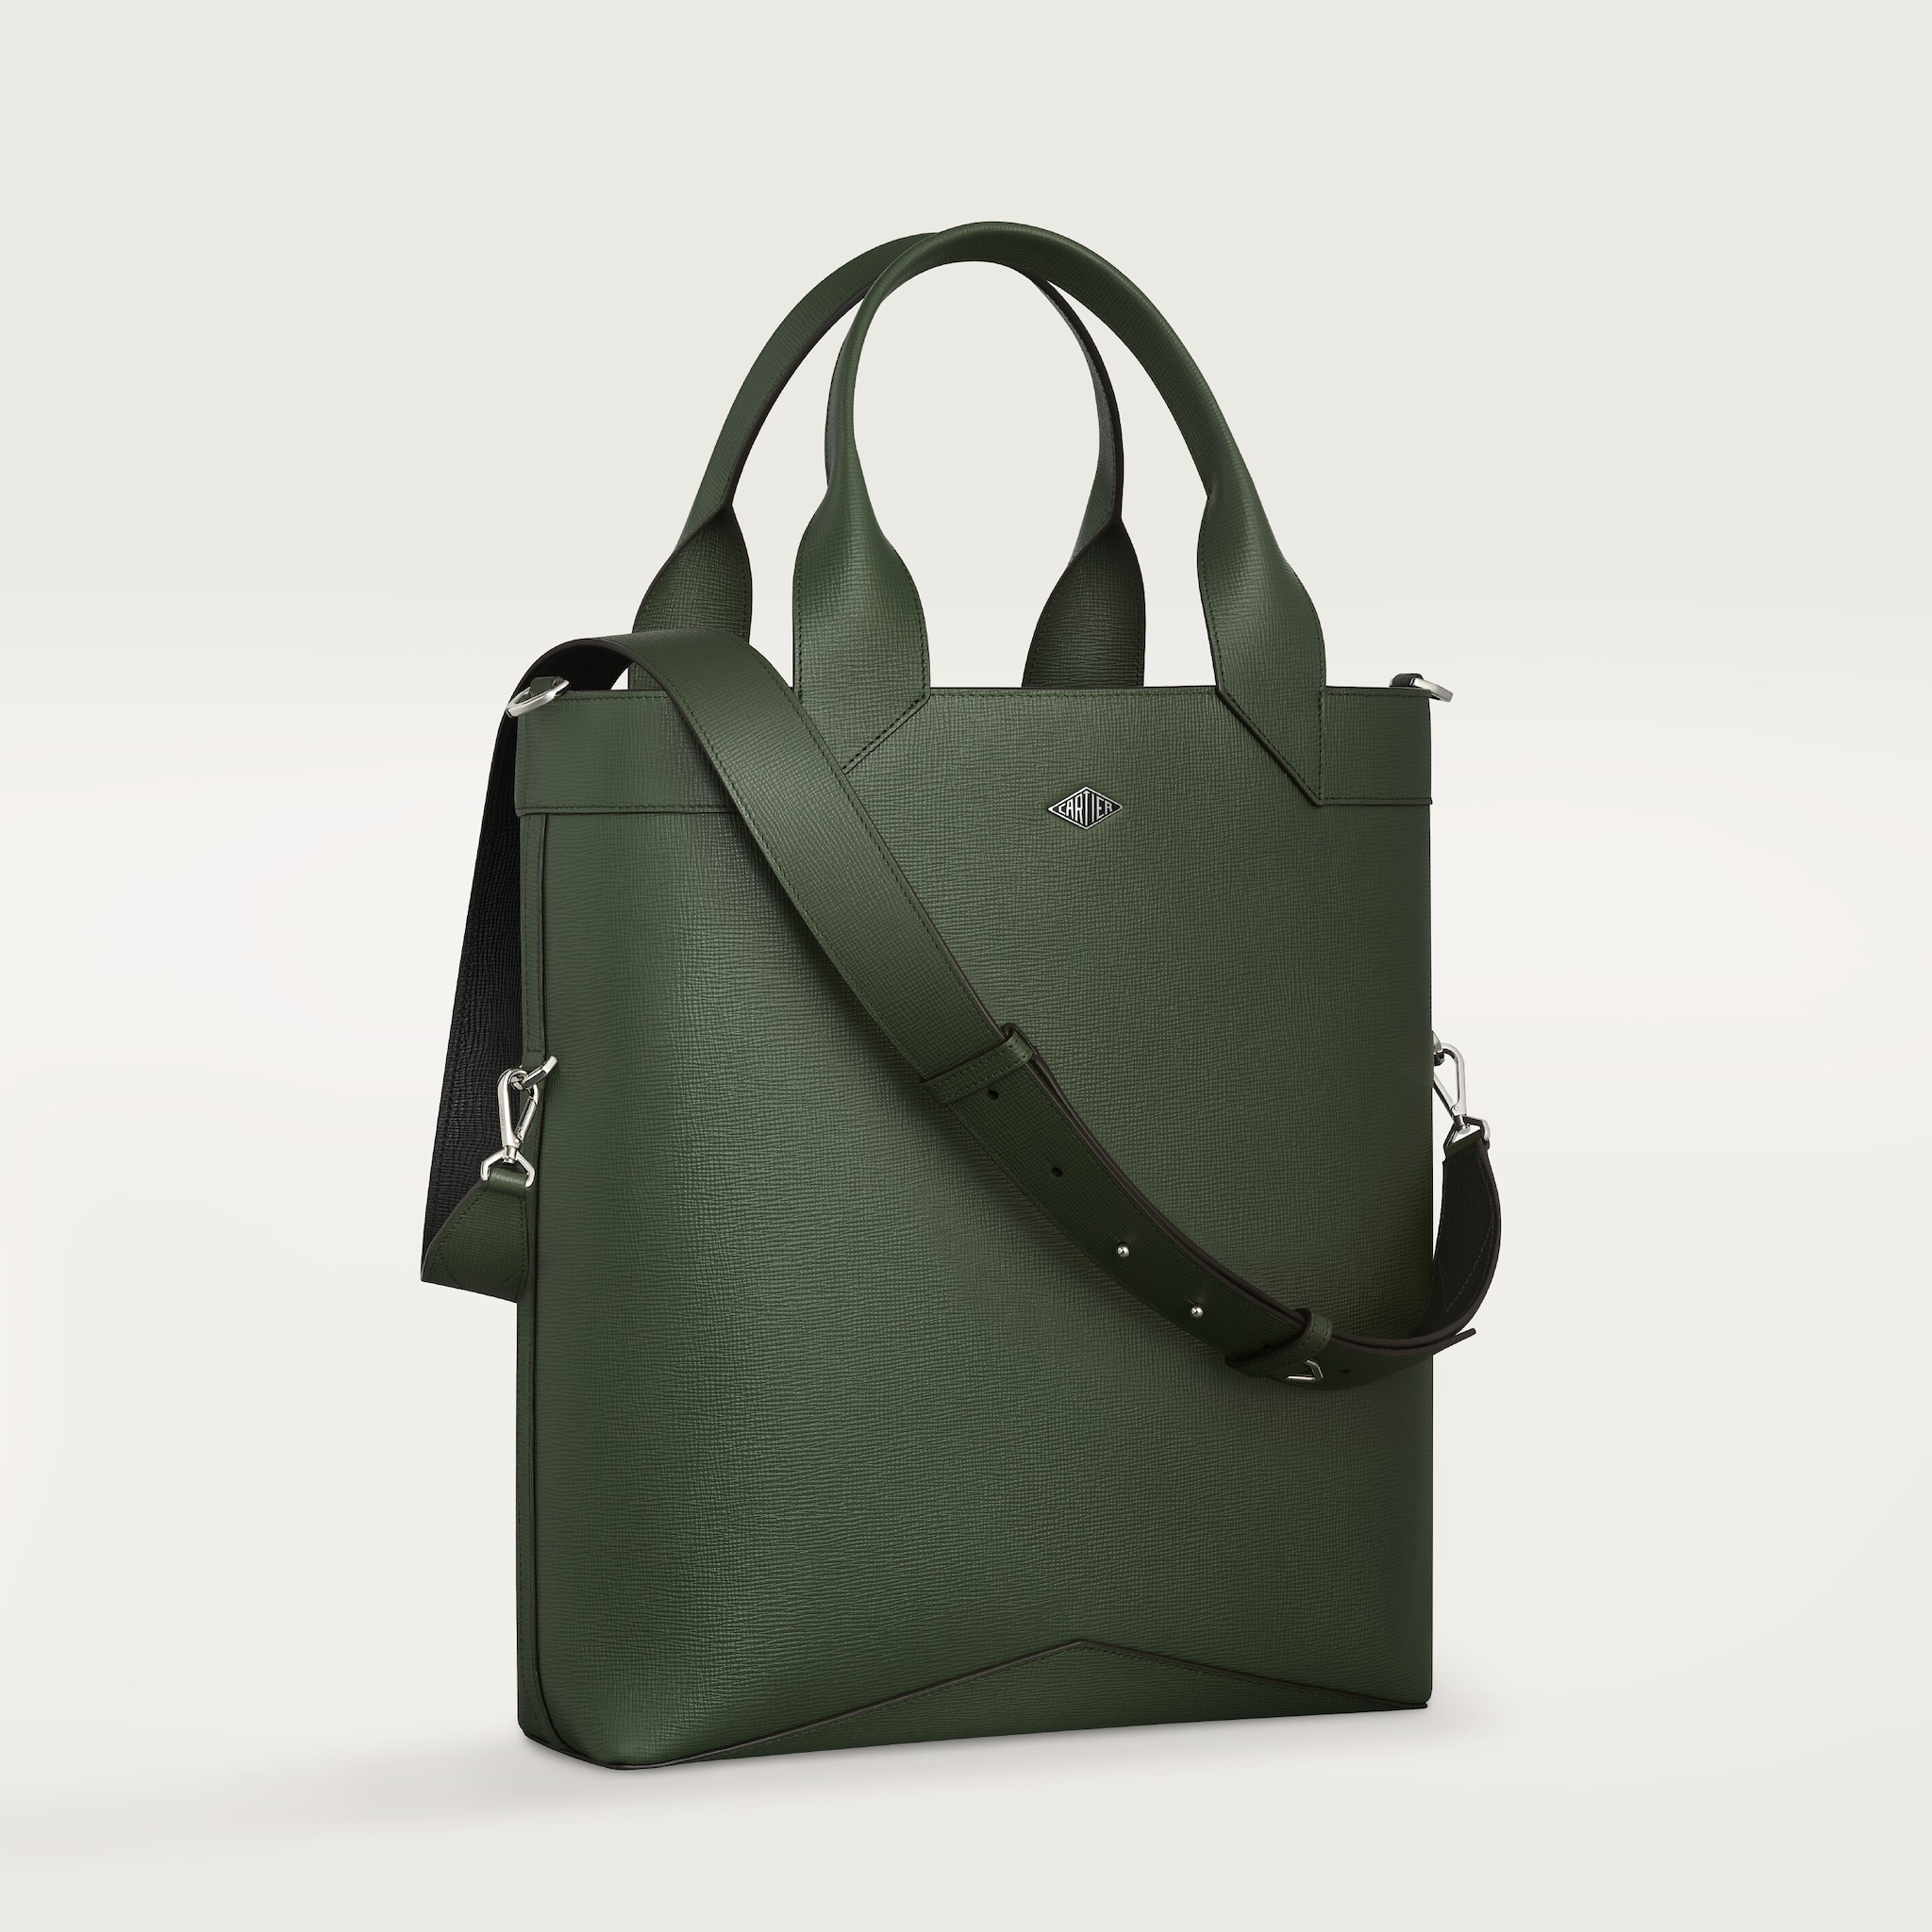 Small model tote bag, Cartier LosangeKhaki textured calfskin, palladium finish and enamel